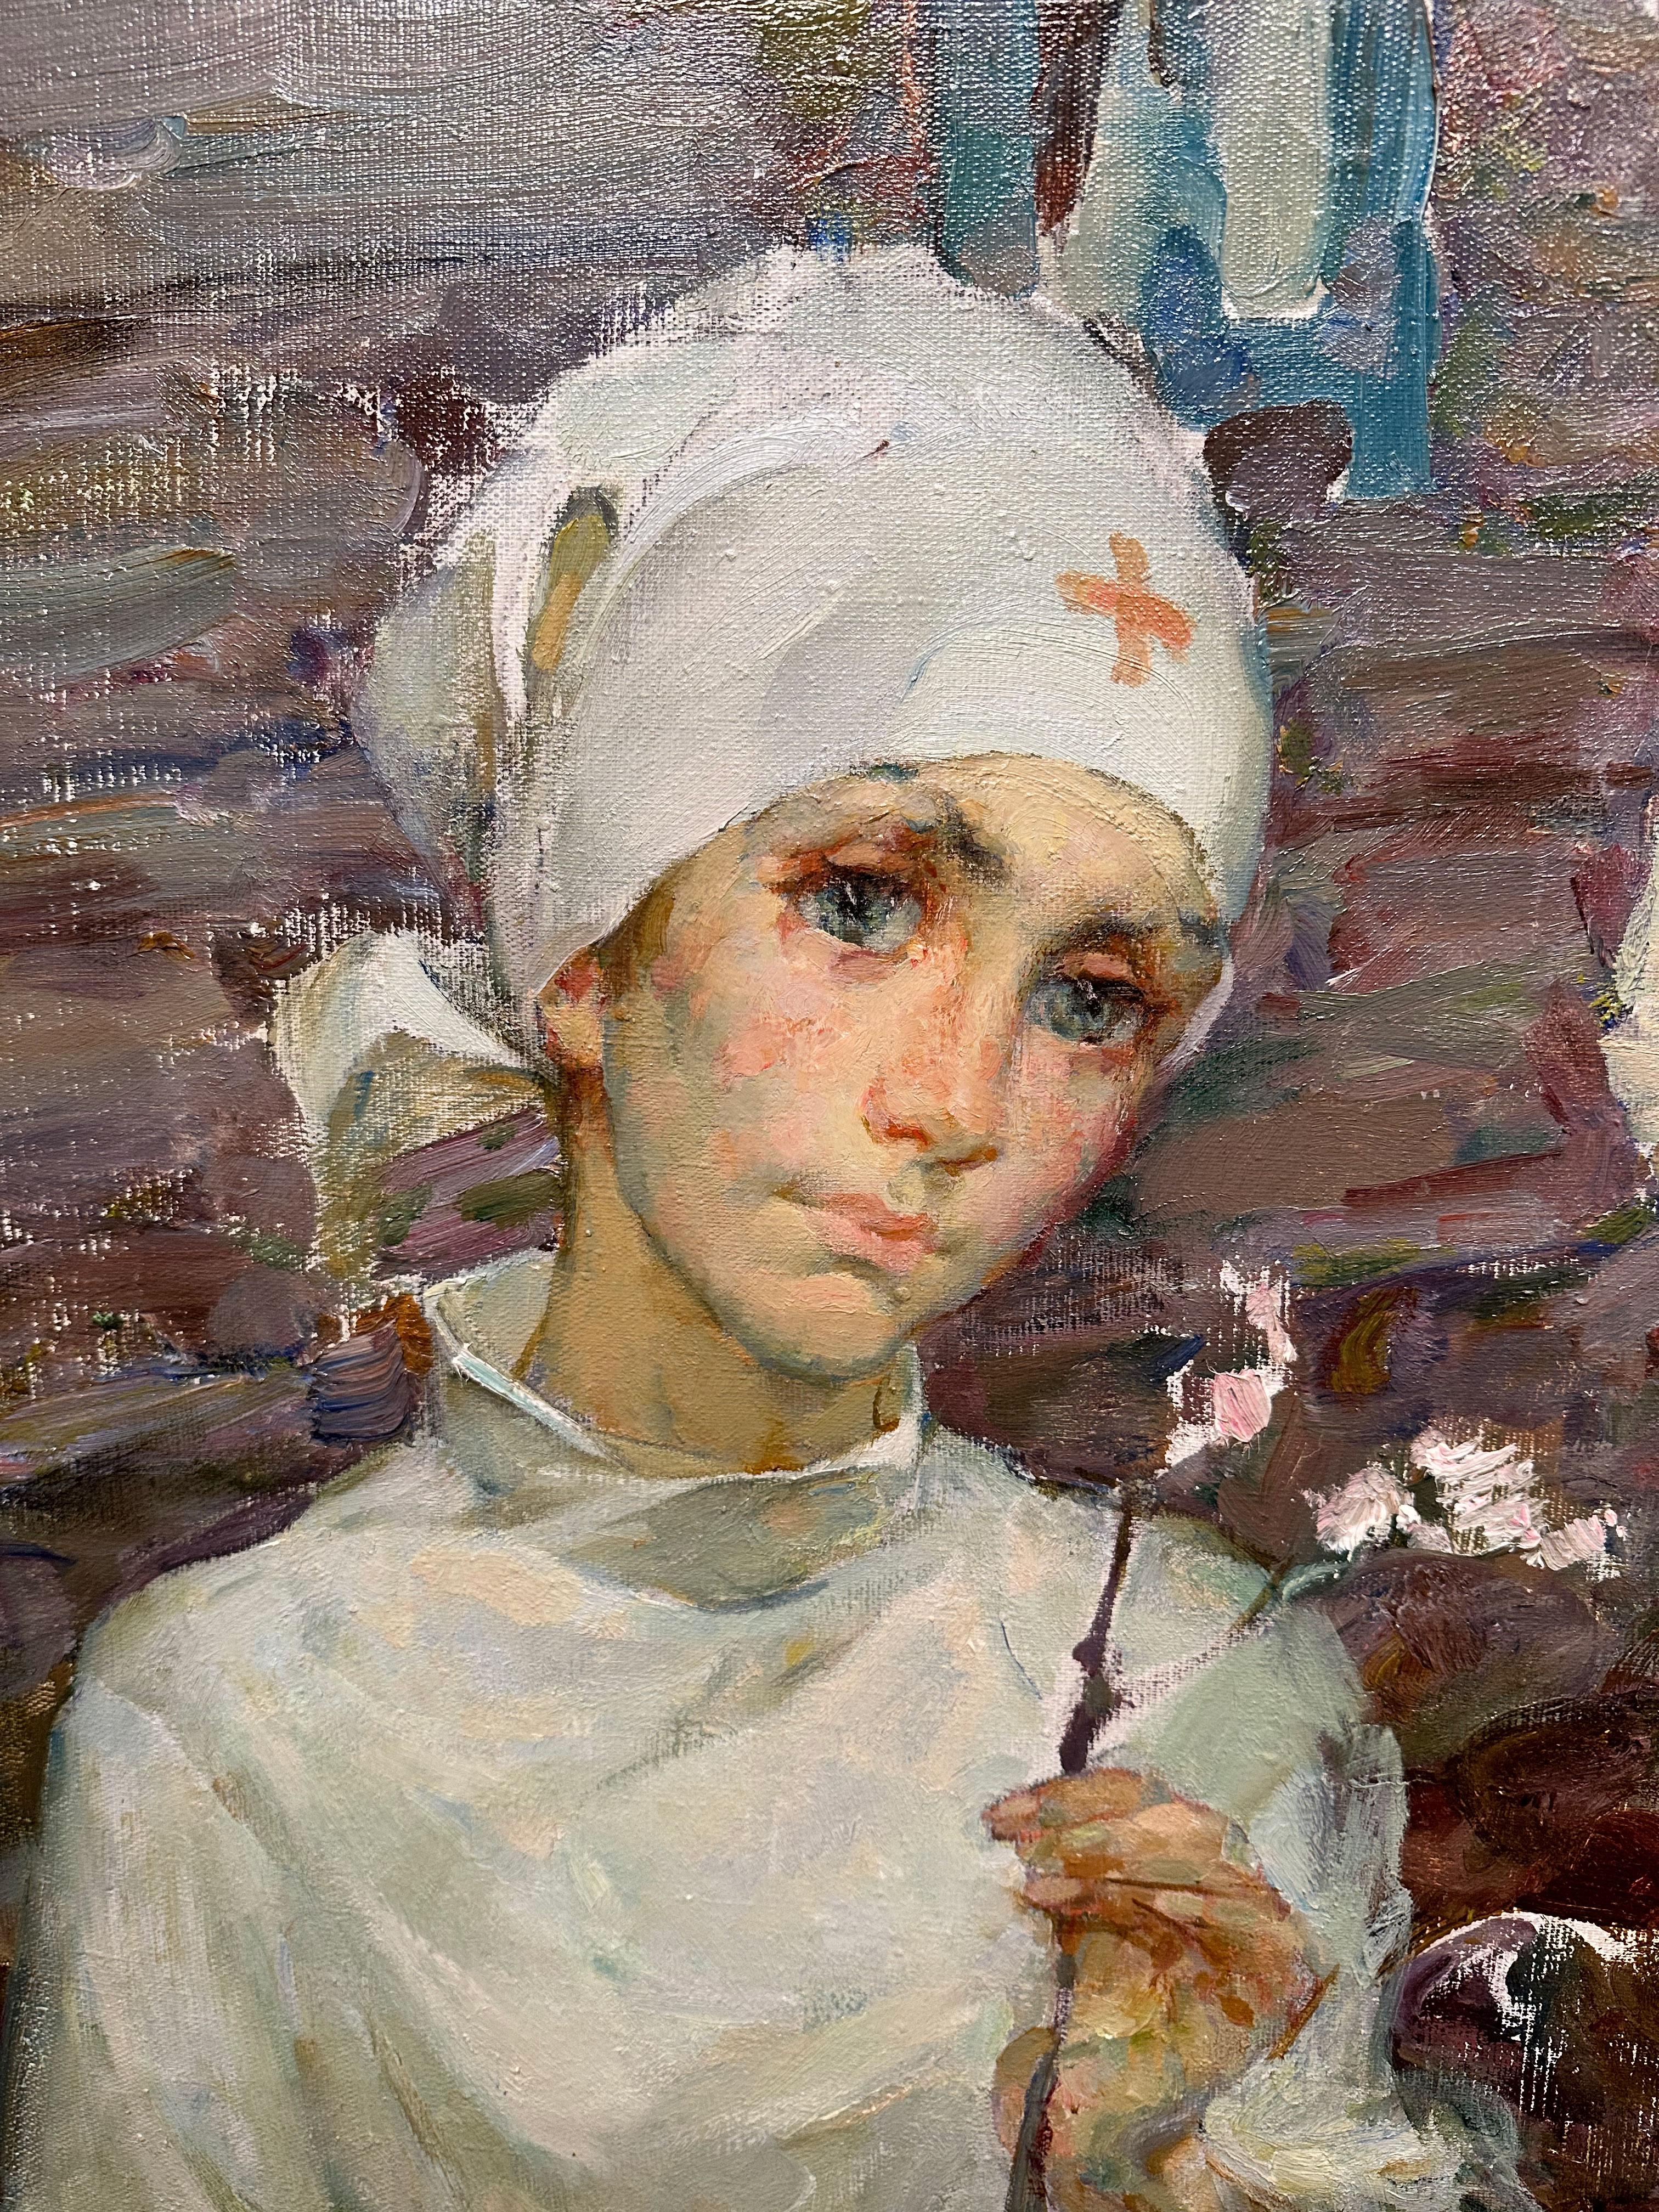 Galina Vasilevna Pshenitsina was born in 1940 in the town of Gorky (now Nizhny Novgorod). She began her studies at the Art School named after Johanson in St. Petersburg. In 1959, she transferred to Repin Institute of Art, studying in Oreshnikov's